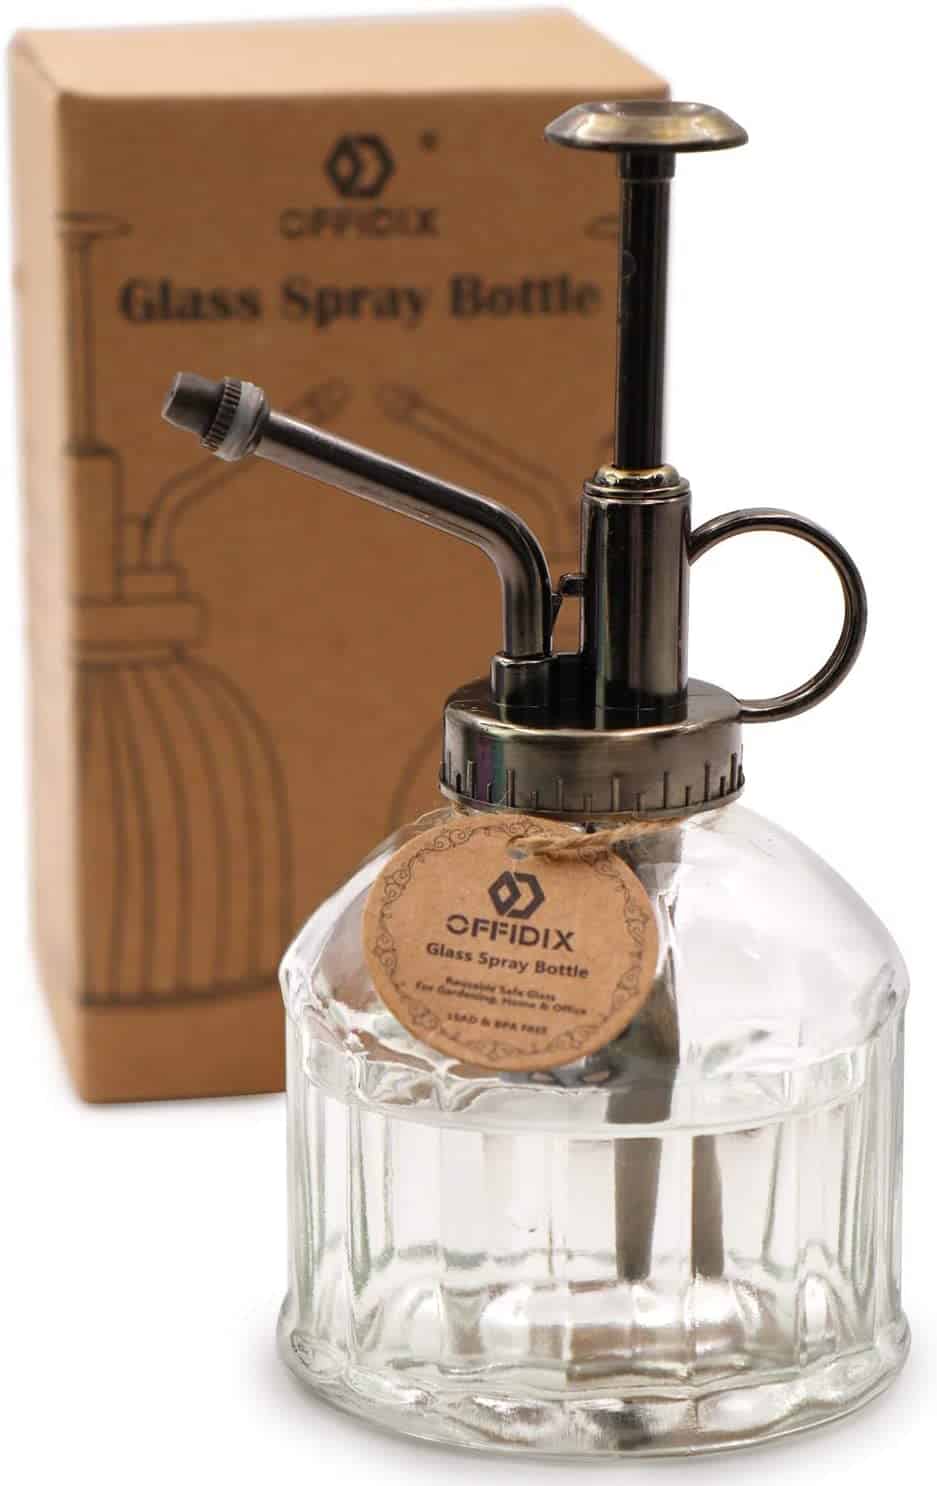 Offidix glass spray bottle